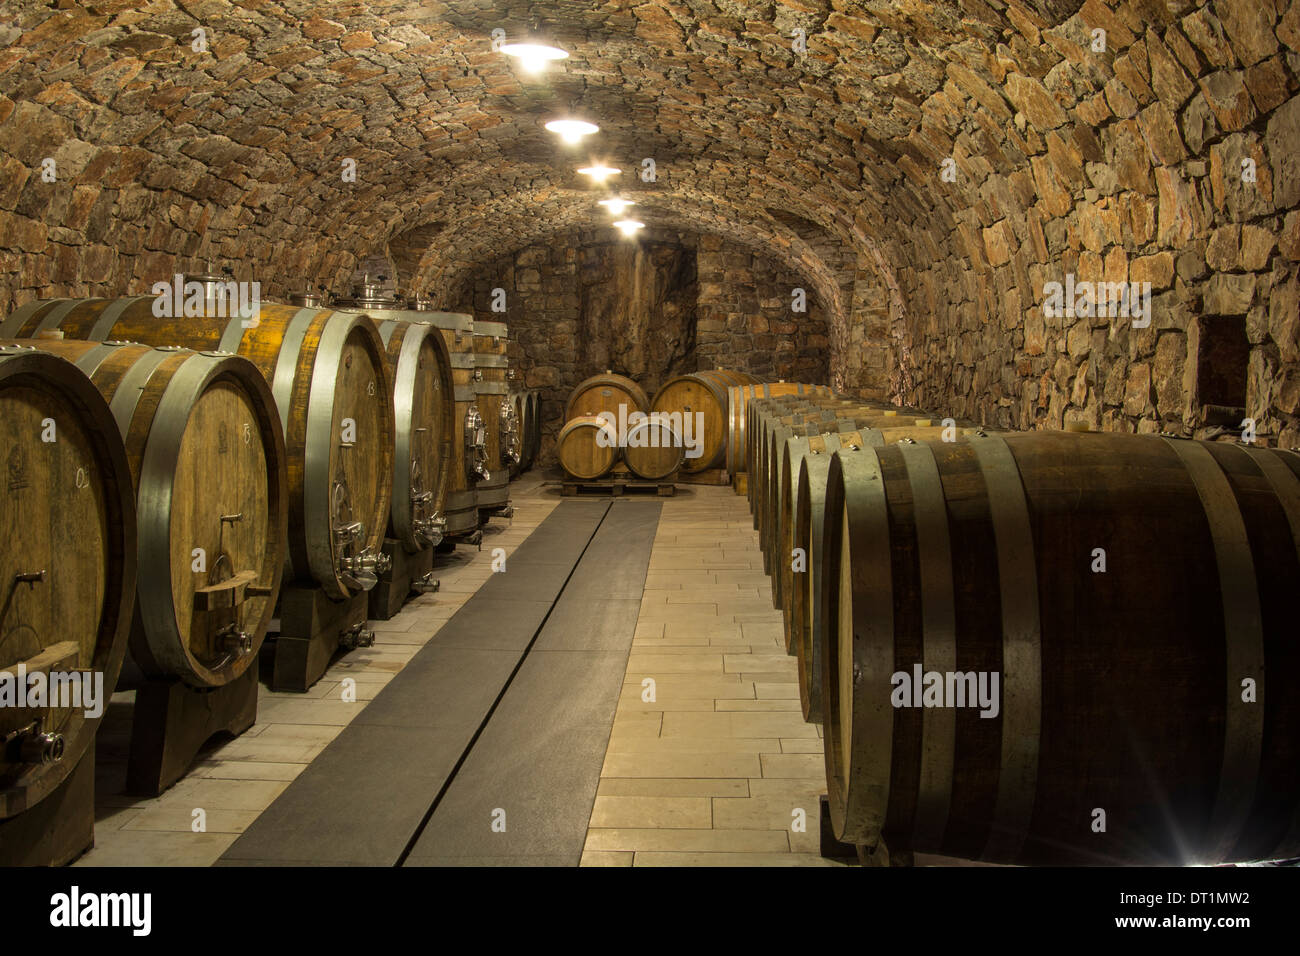 Wine cellar and barrels Stock Photo